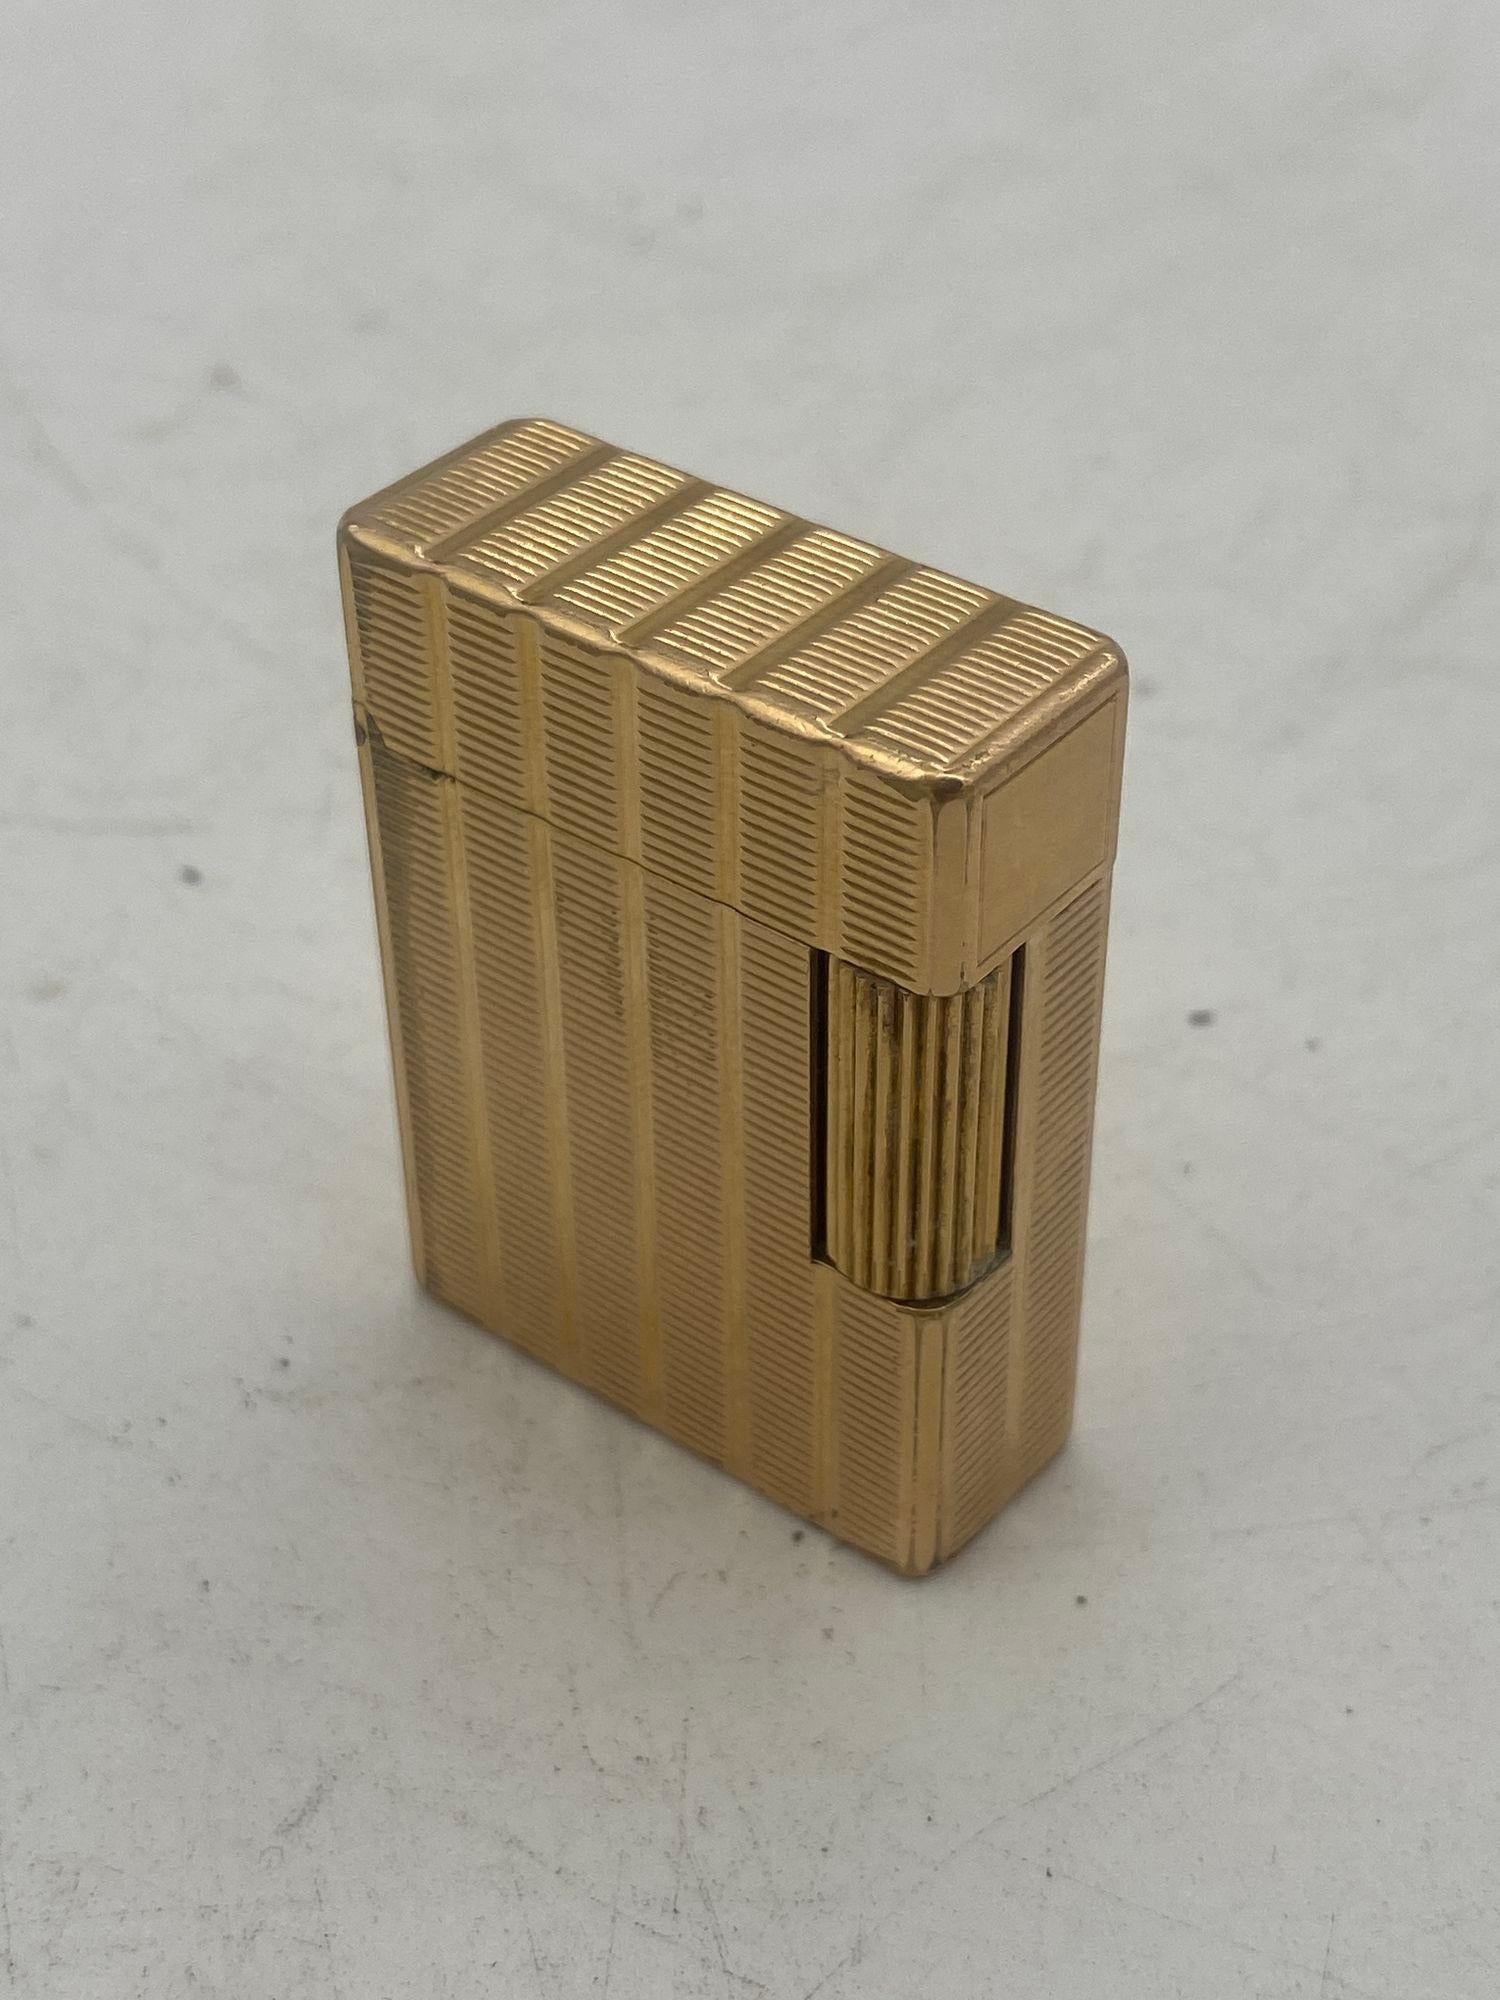 1950s gas gold butane plated pocket lighter made in France.